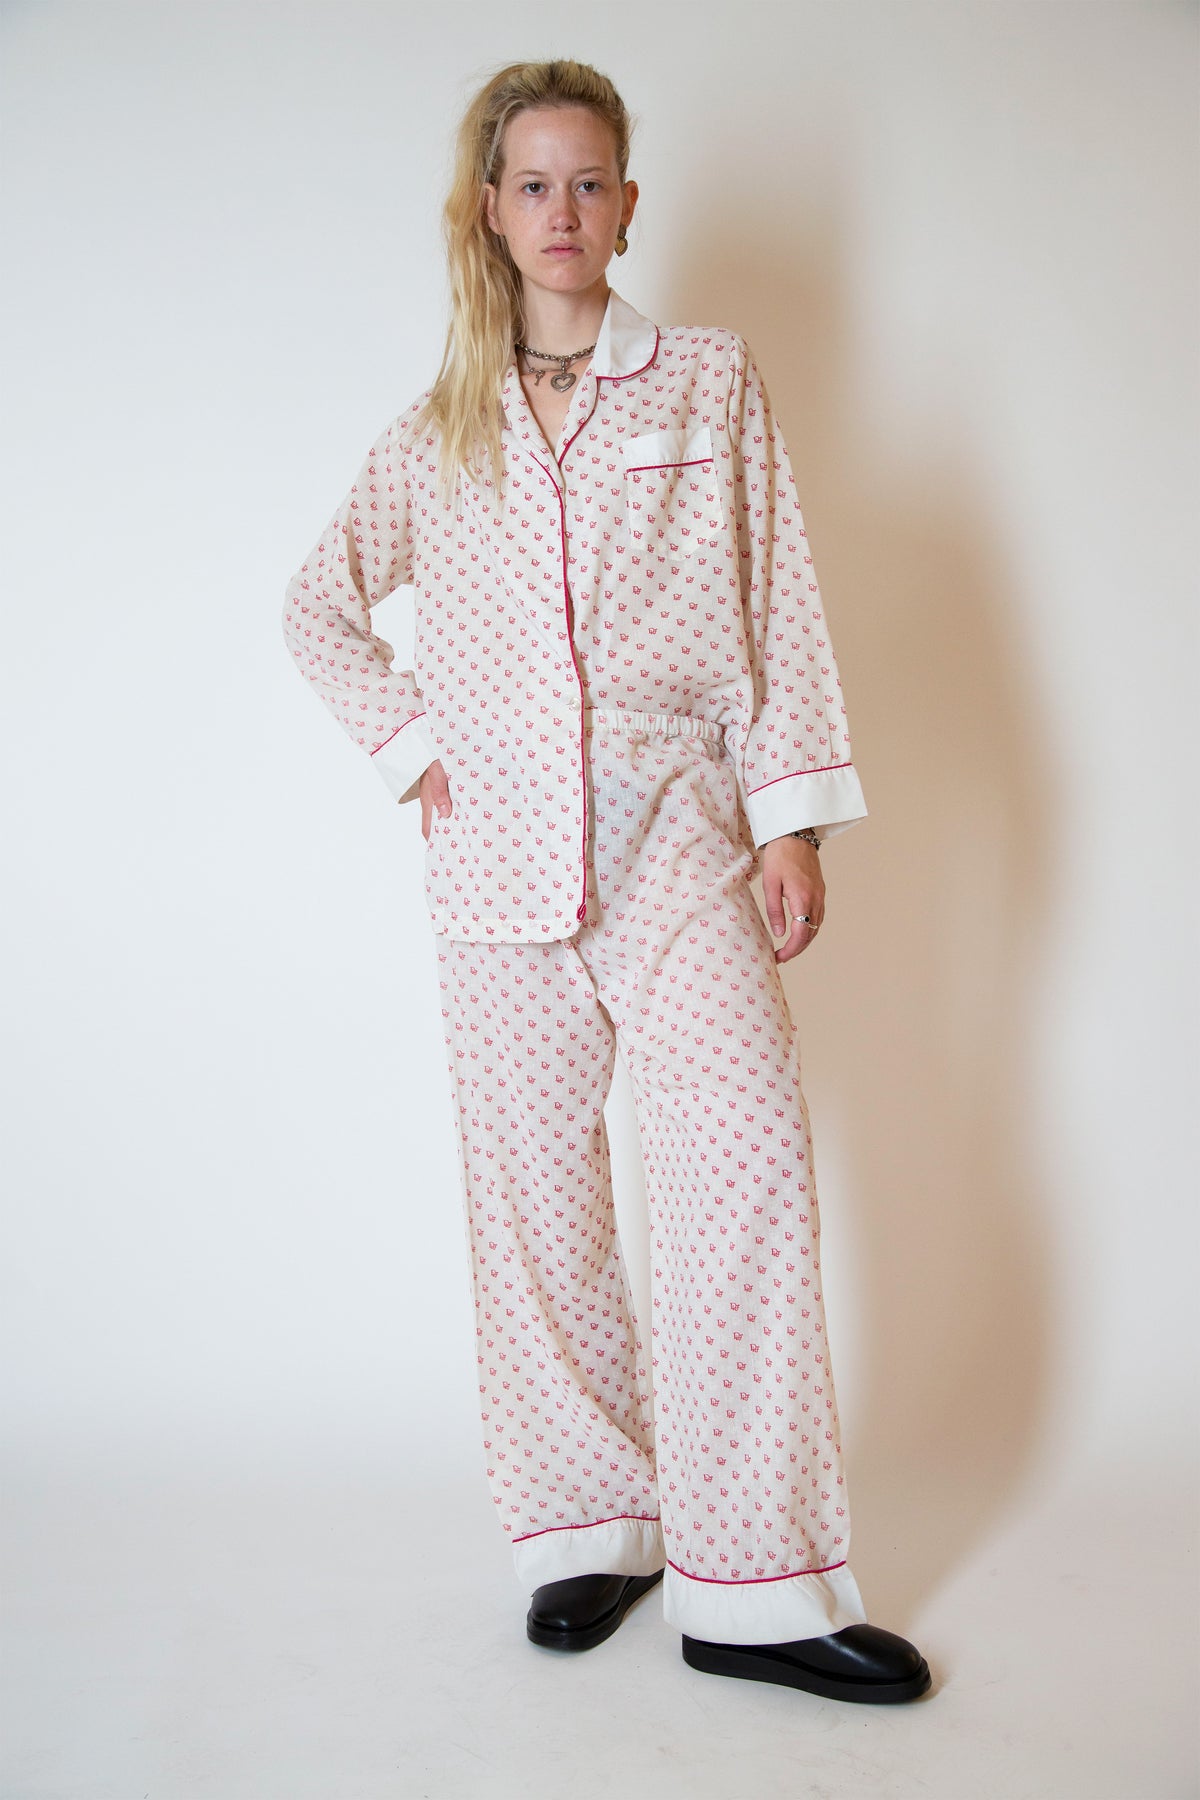 Christian Dior logo pajamas